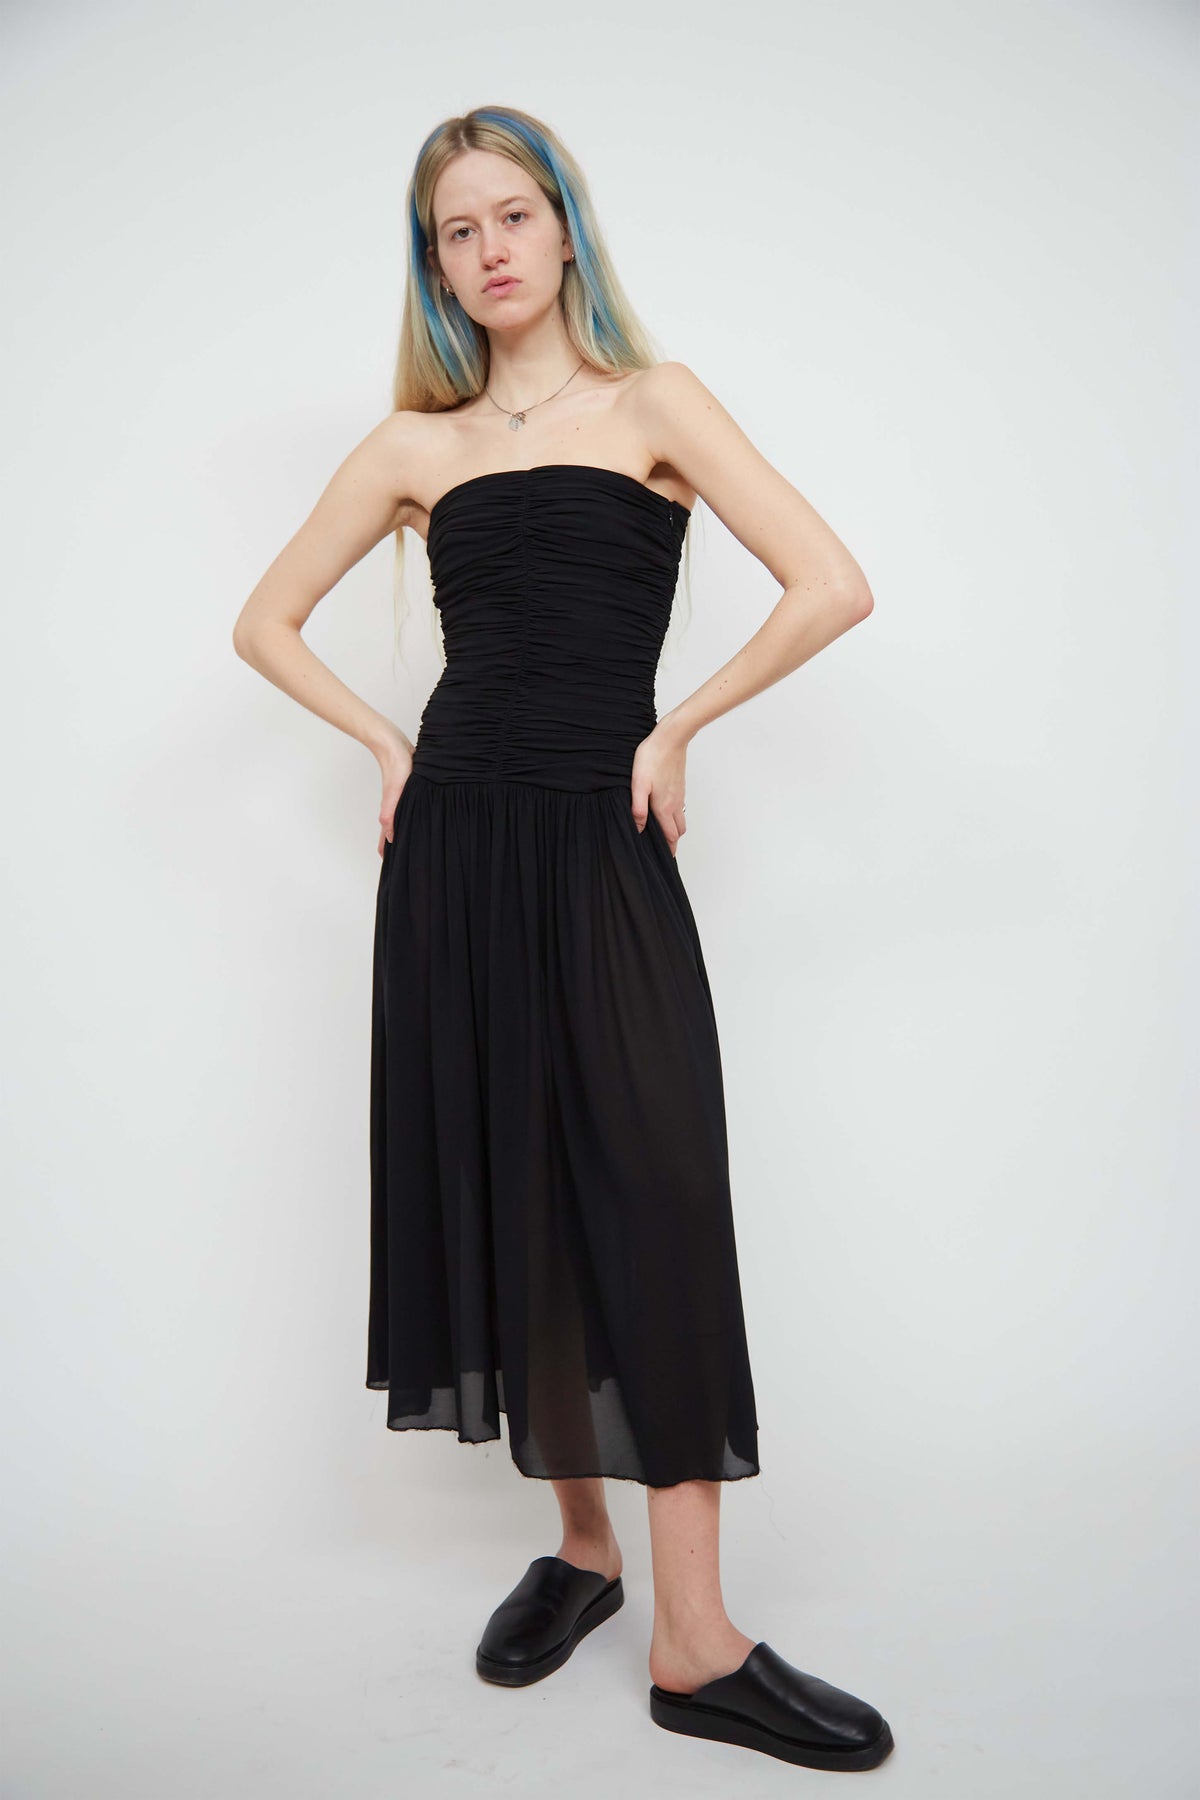 Yves Saint Laurent silk dress